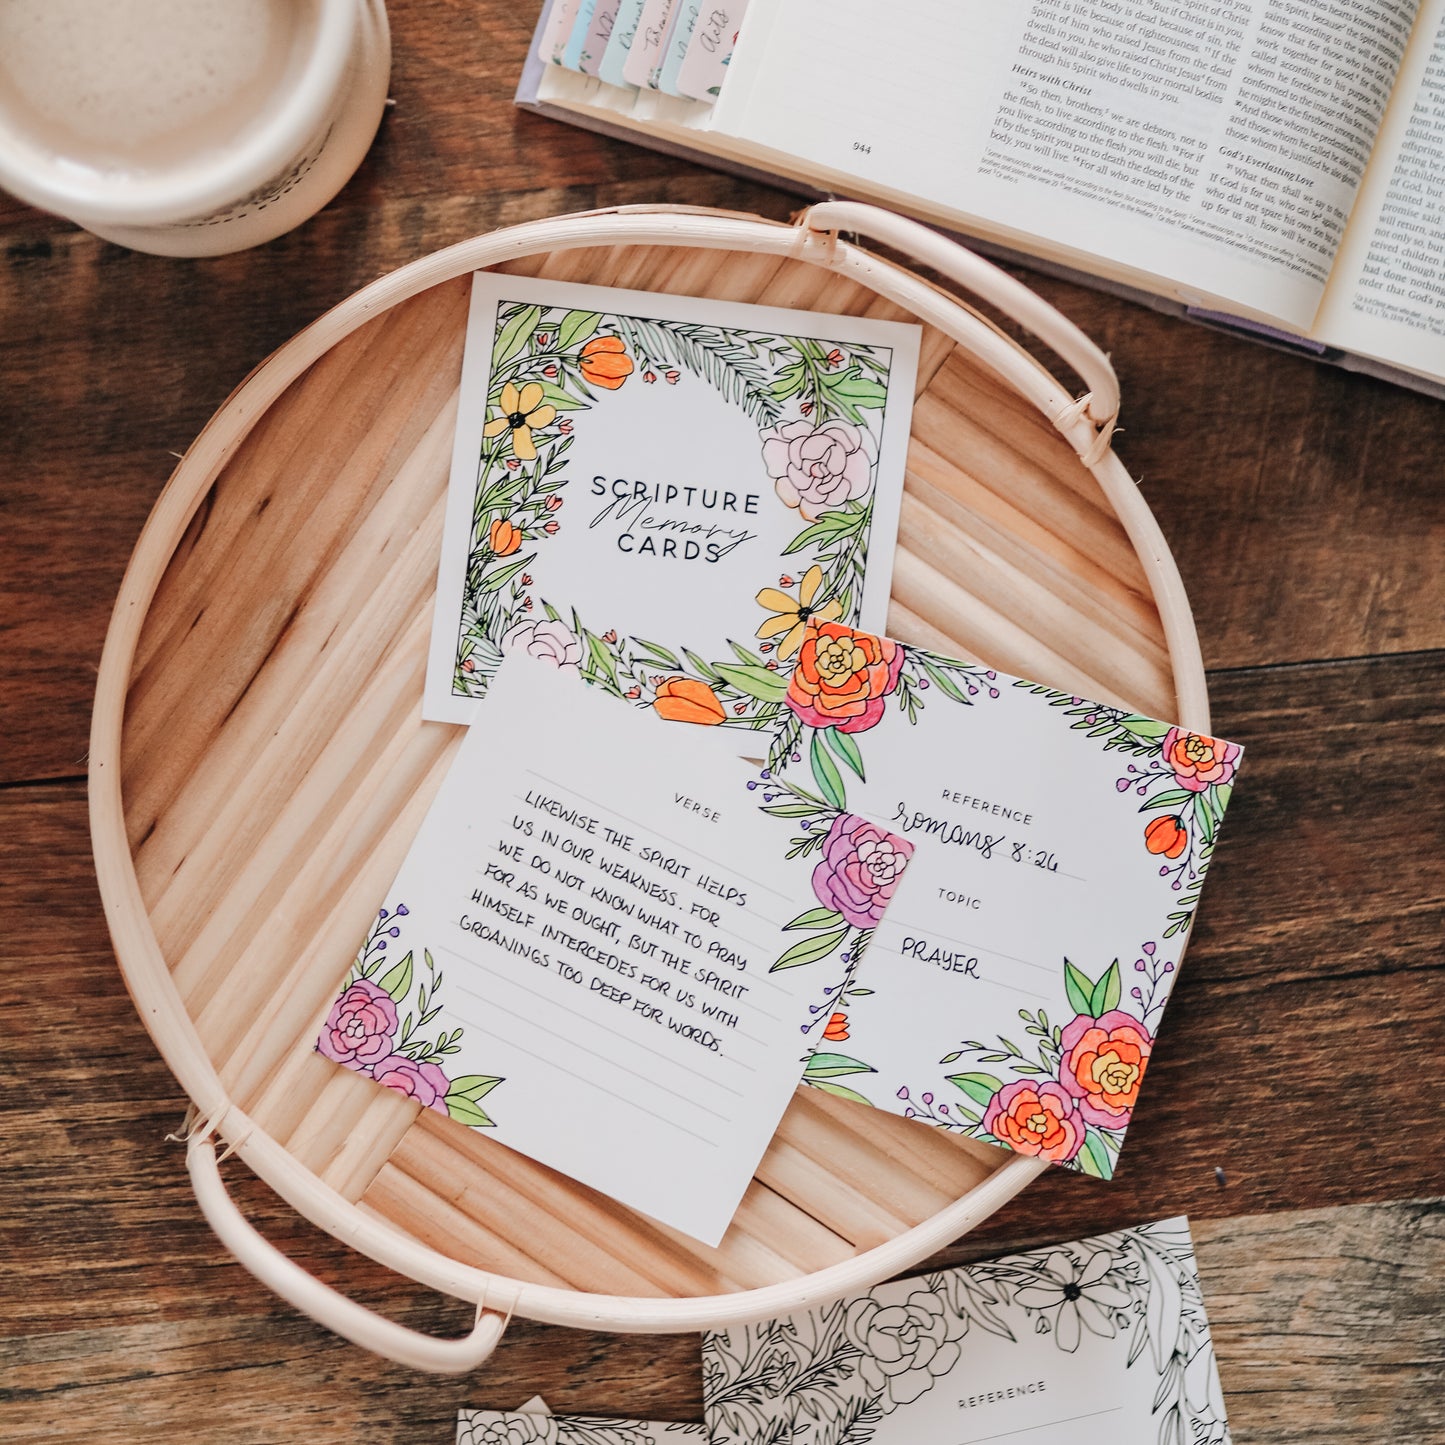 Scripture Memory Cards - Coloring Floral